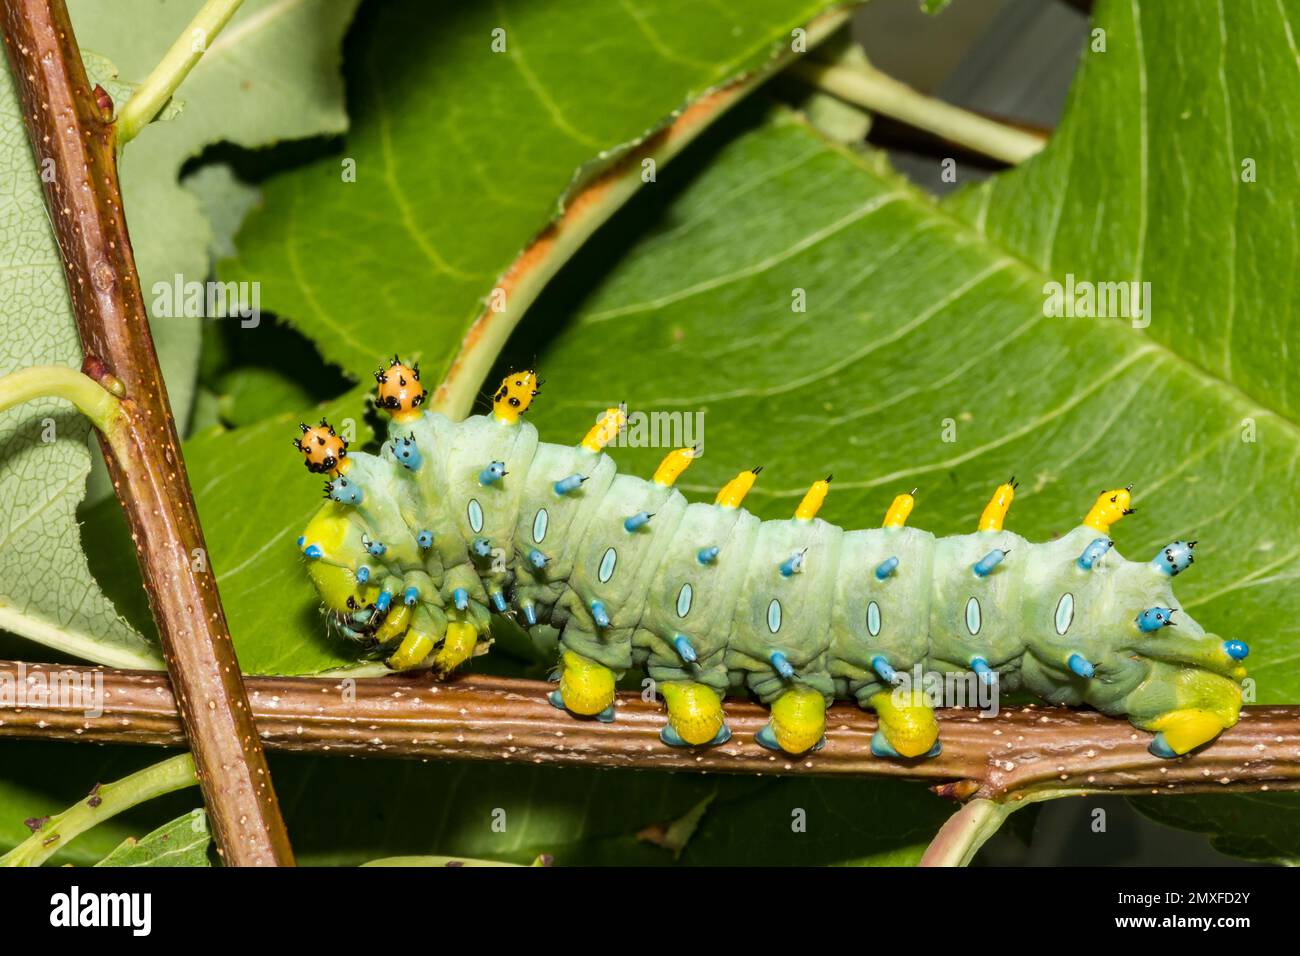 Forth Instar Cecropia Caterpillar - Hyalophora cecropia Stock Photo